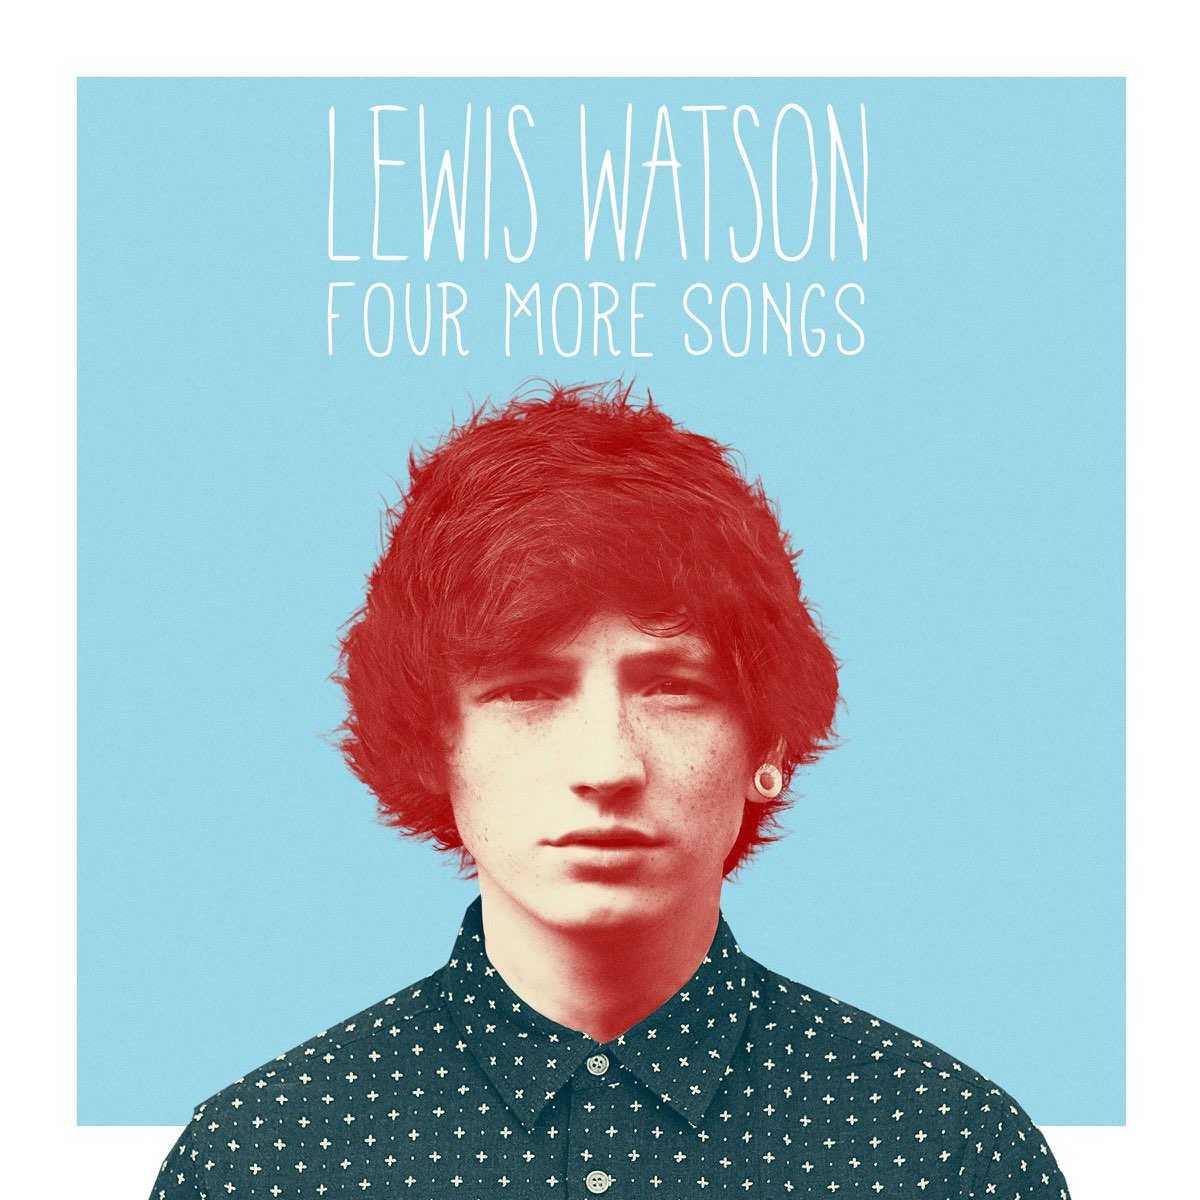 Lewis Watson — Calling cover artwork